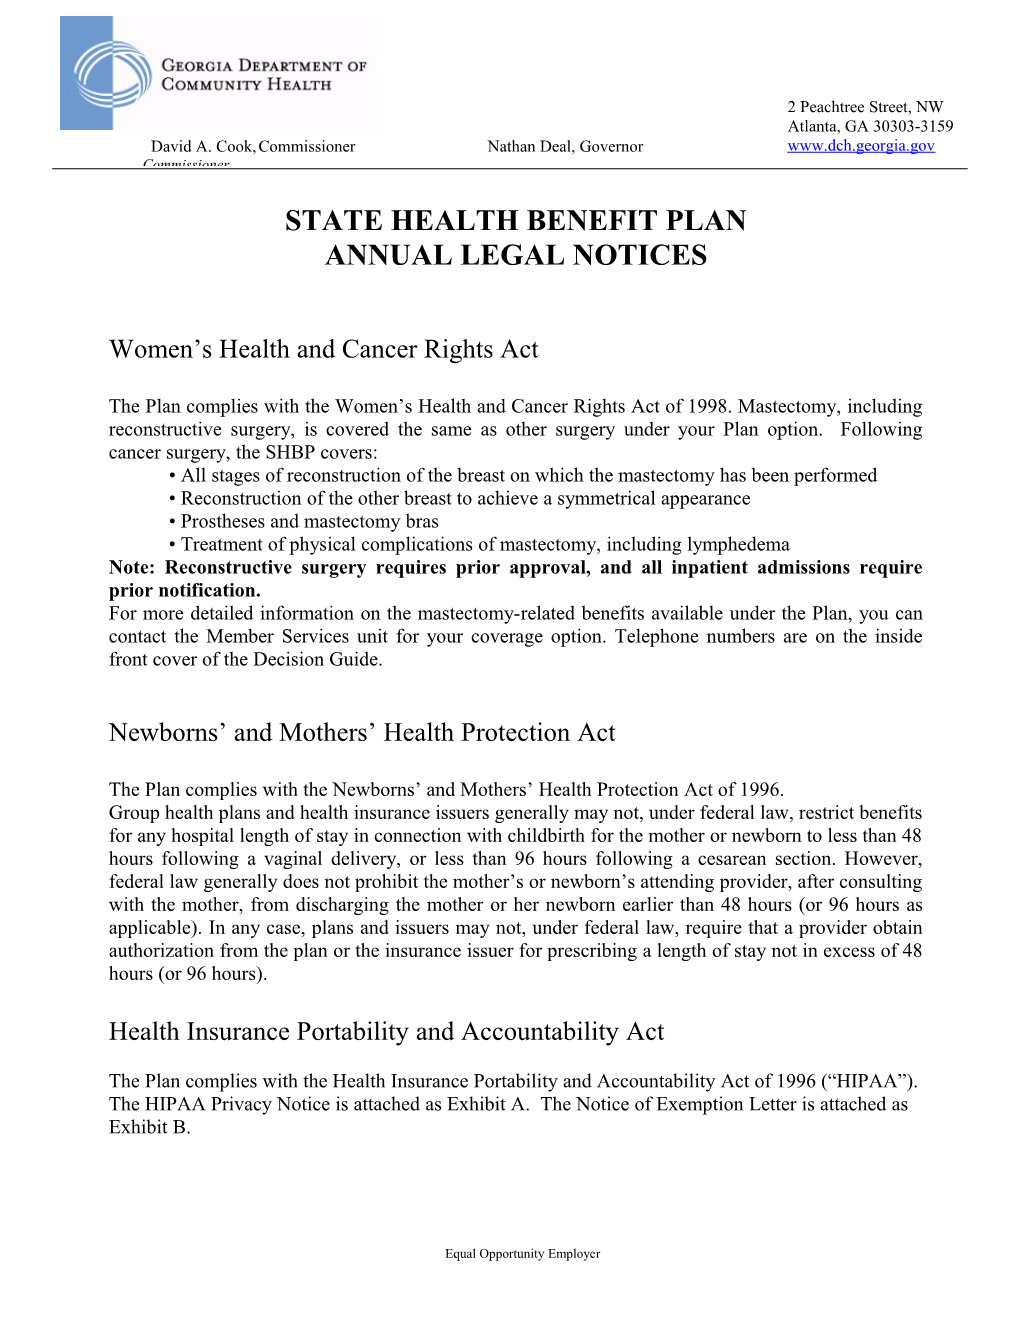 State Health Benefit Plan